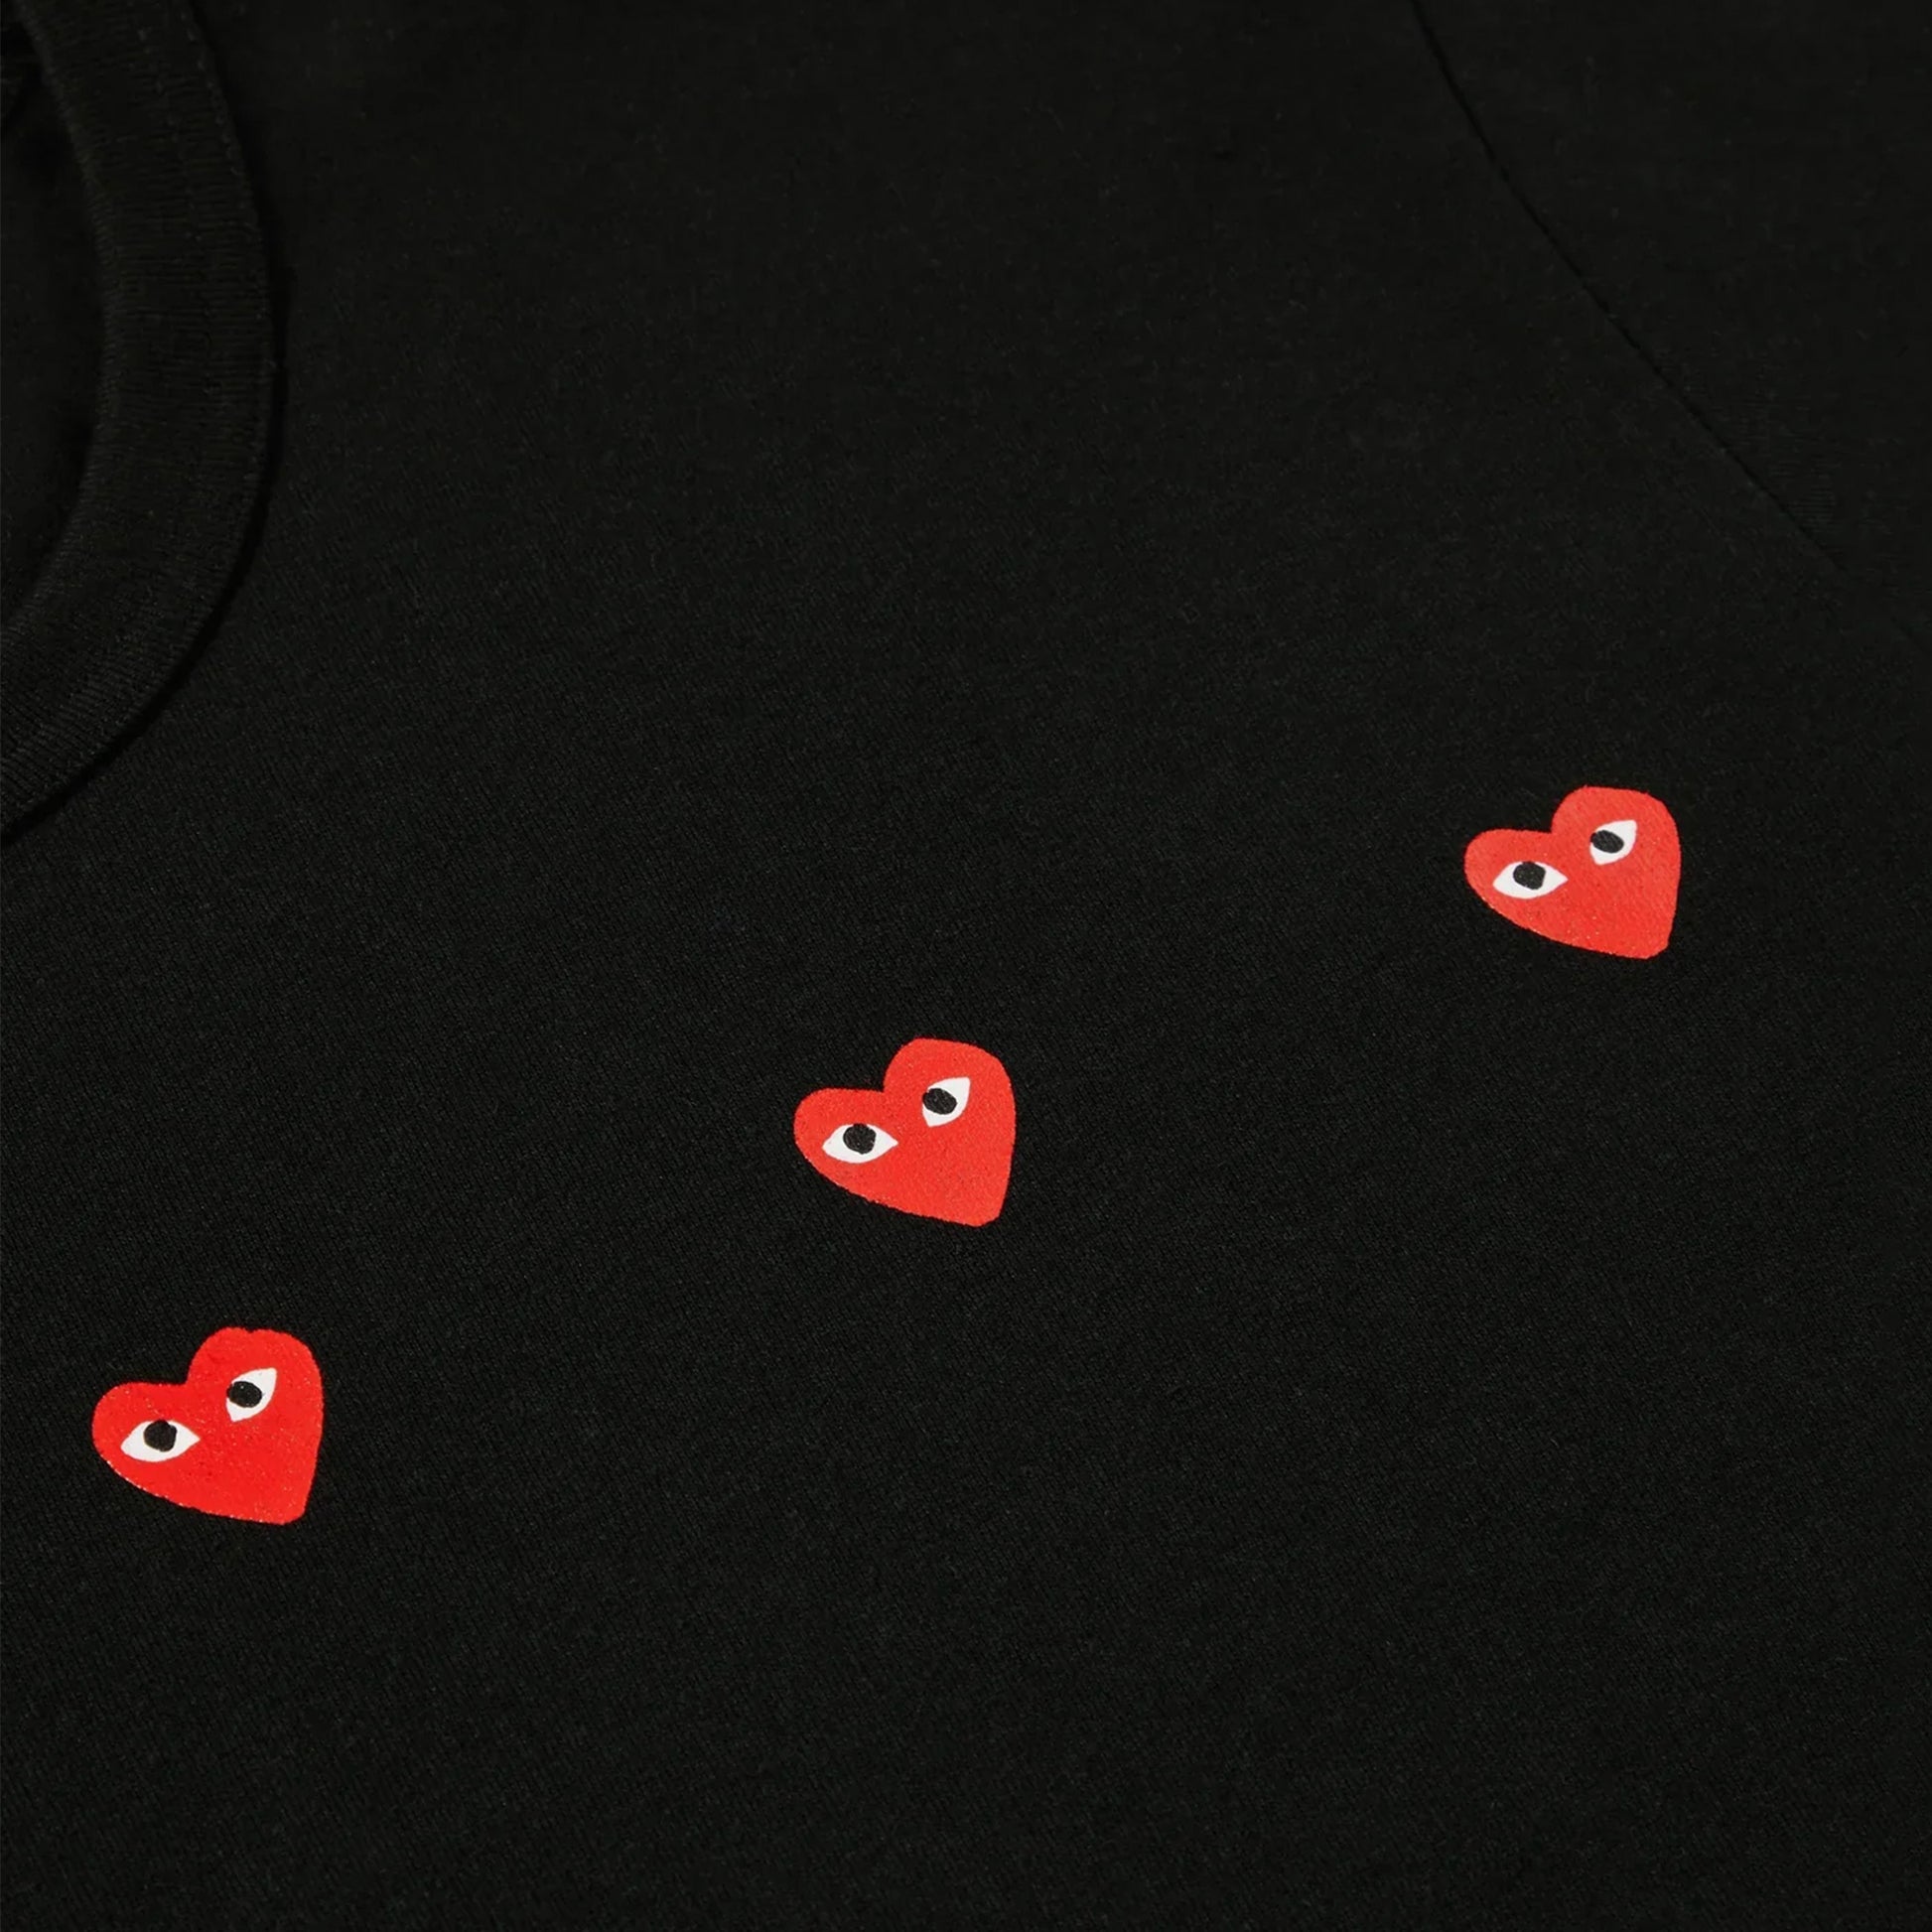 CdG Play Triple Hearts Print T-Shirt in Farbe black